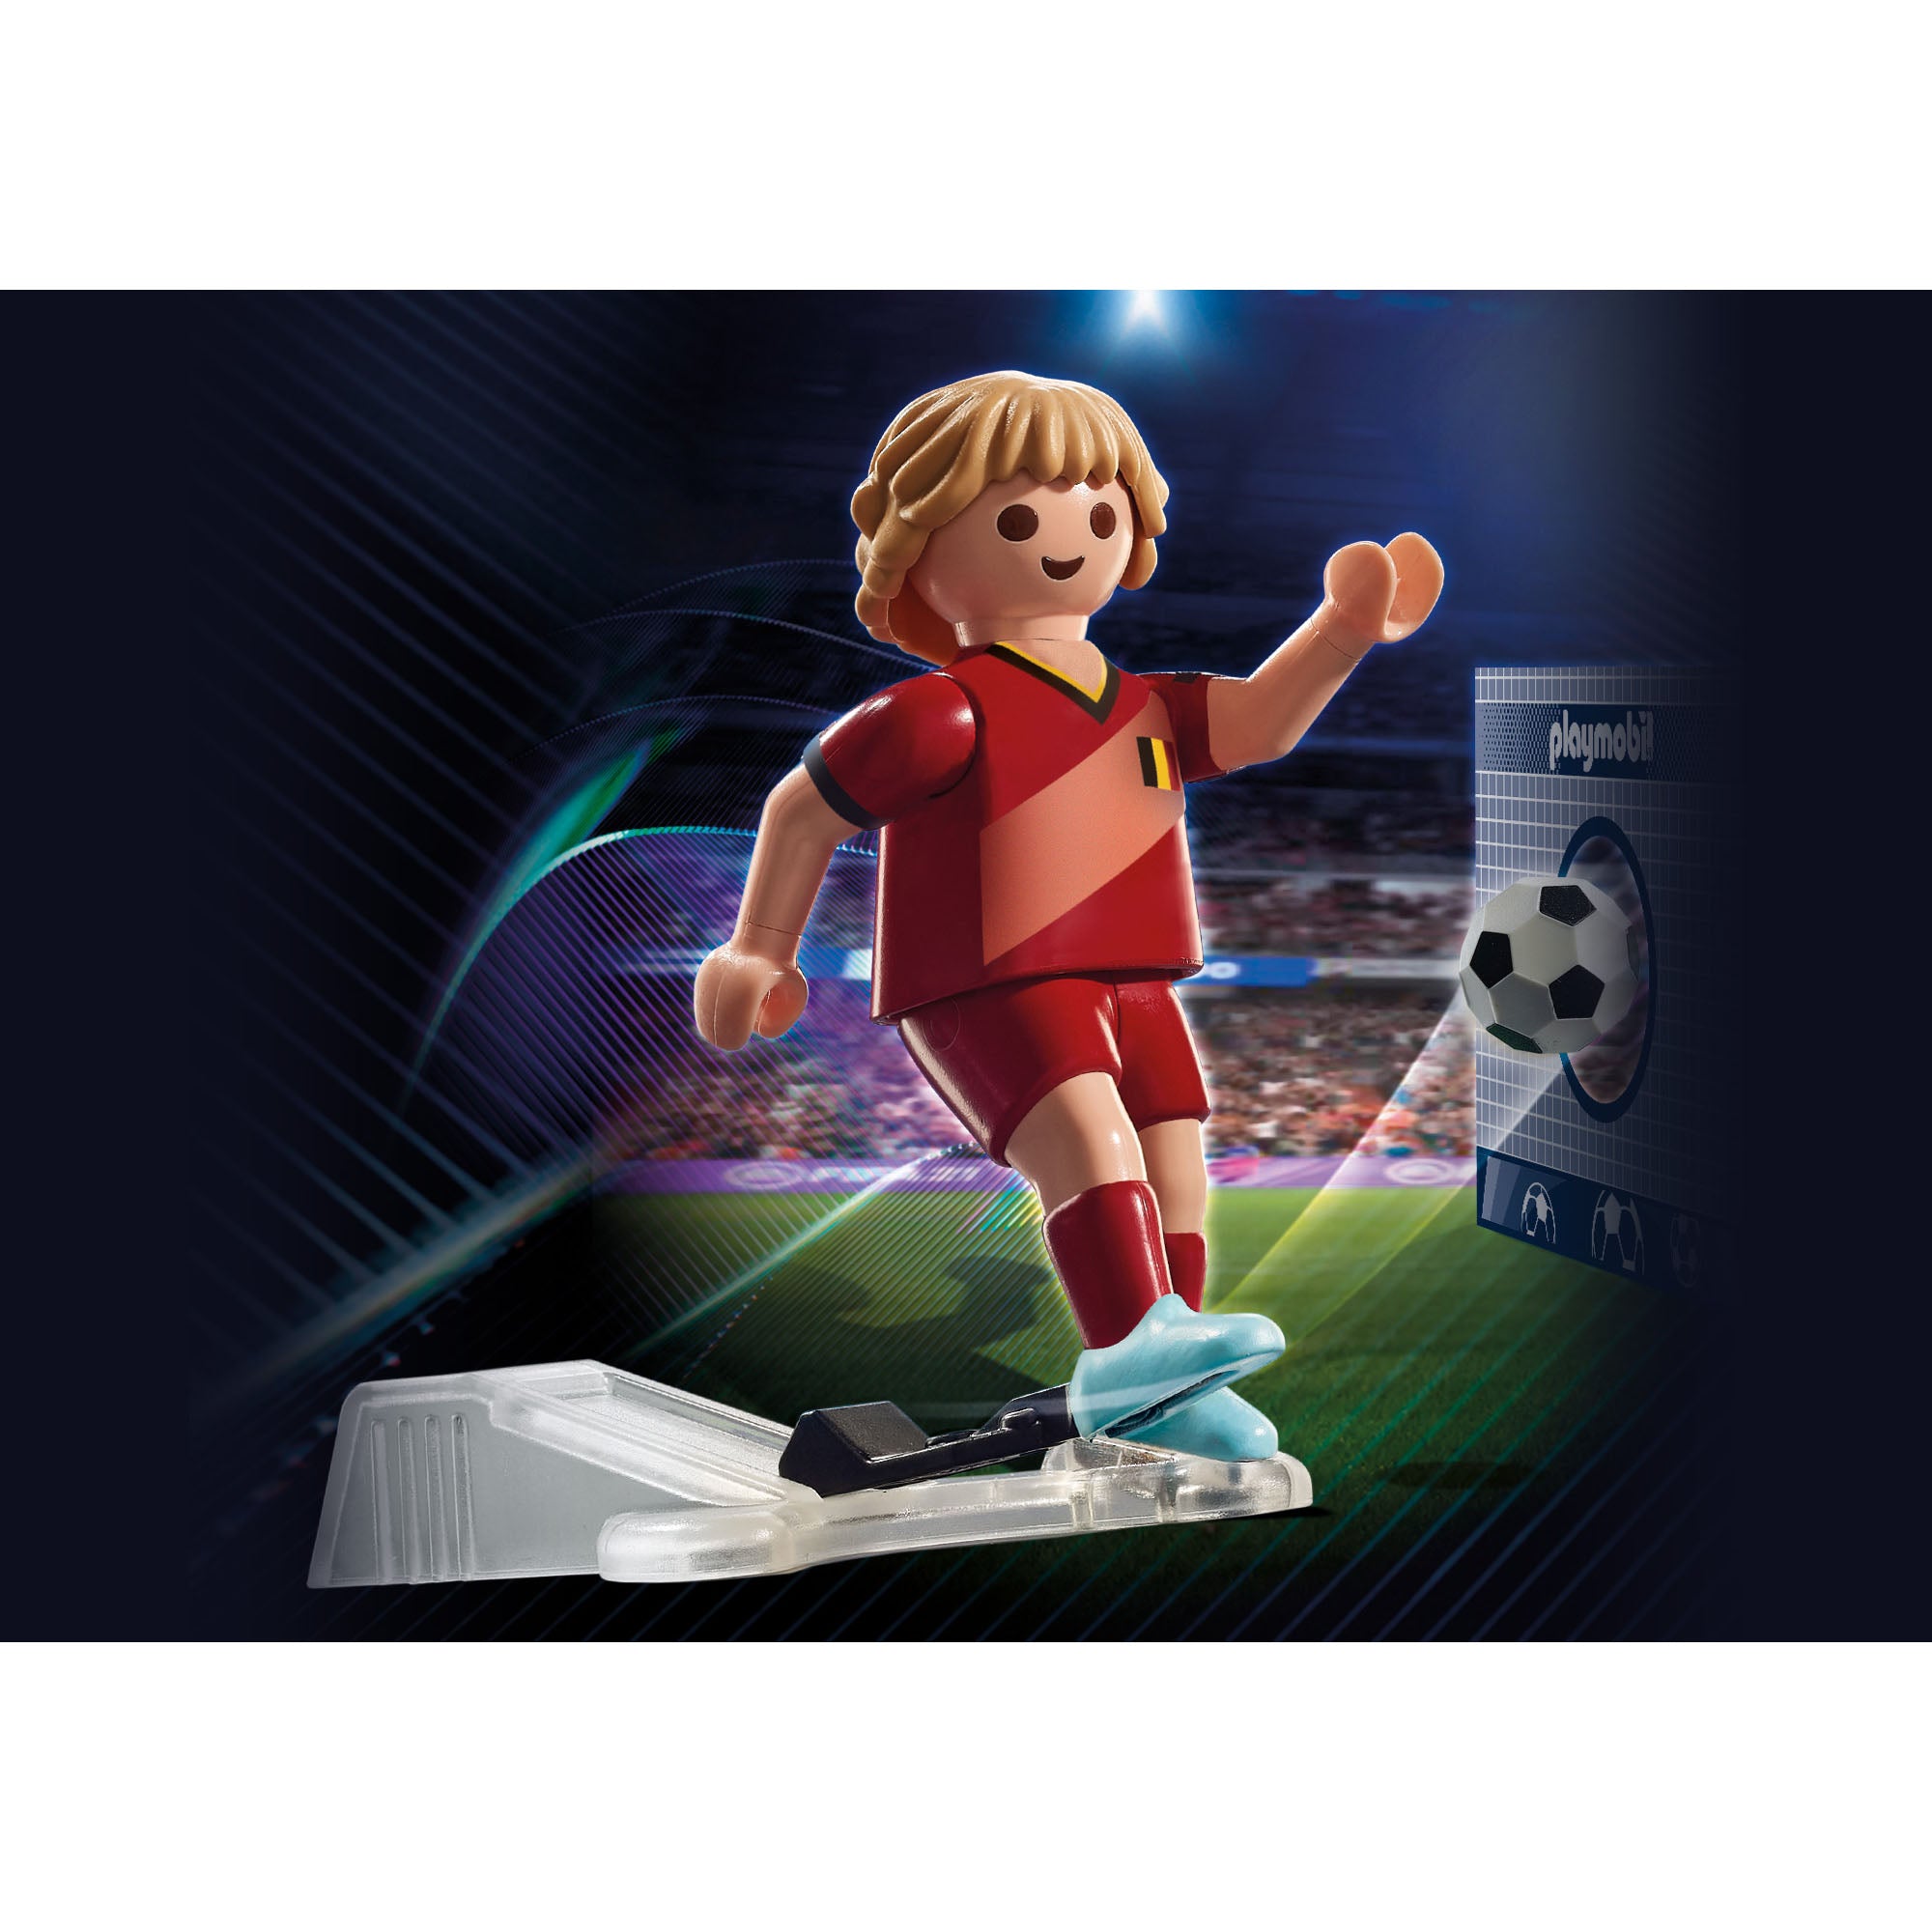 Playmobil - jucator de fotbal belgian